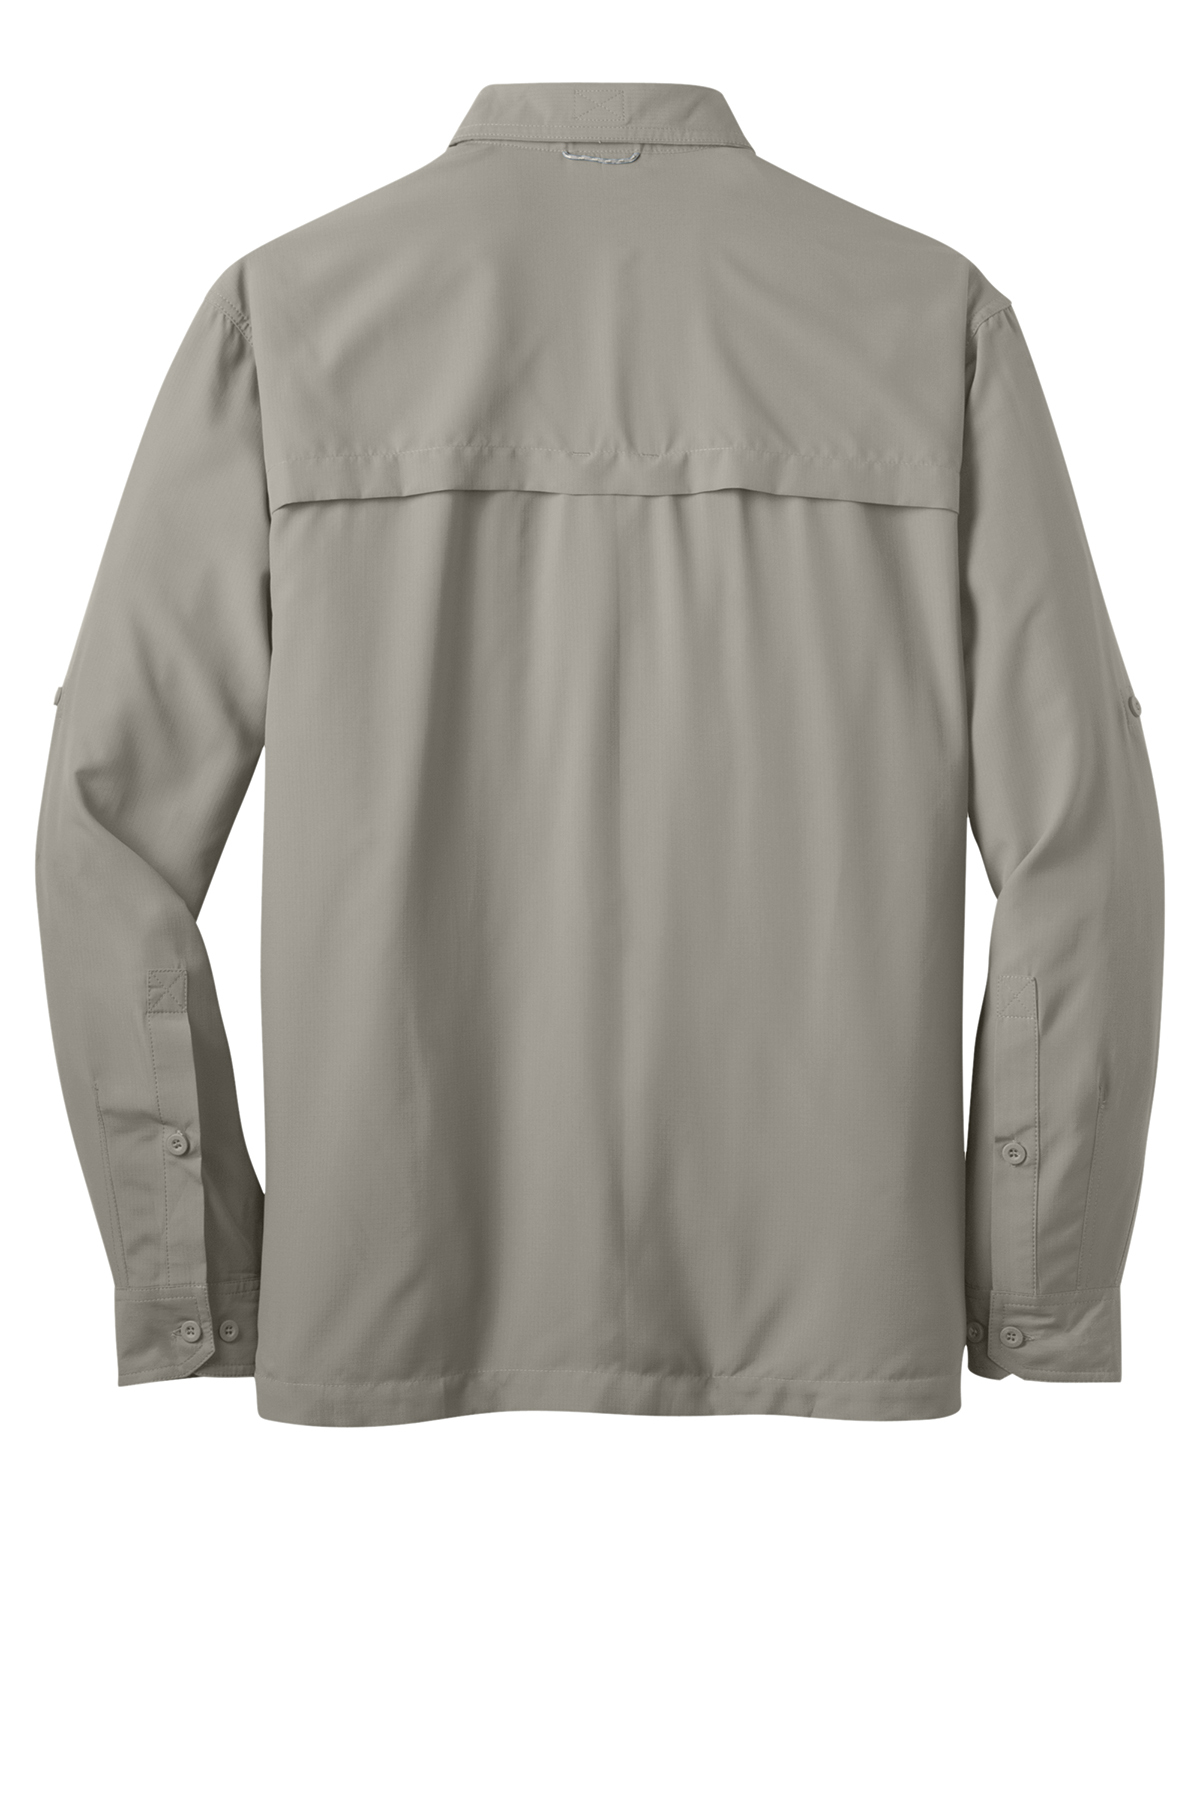 Eddie Bauer - Long Sleeve Performance Fishing Shirt, Product